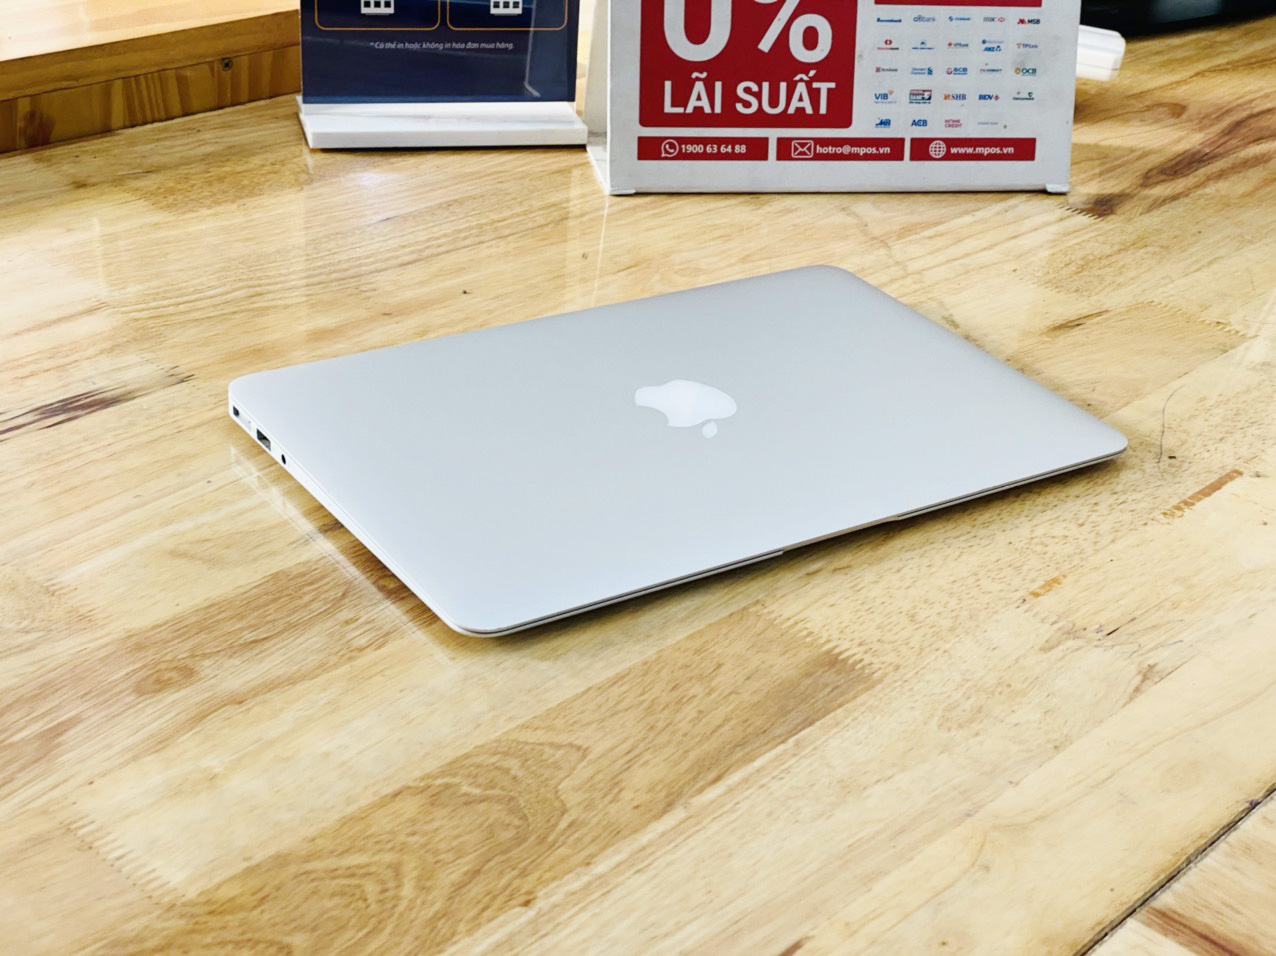 Macbook Air 11-inch 2015 